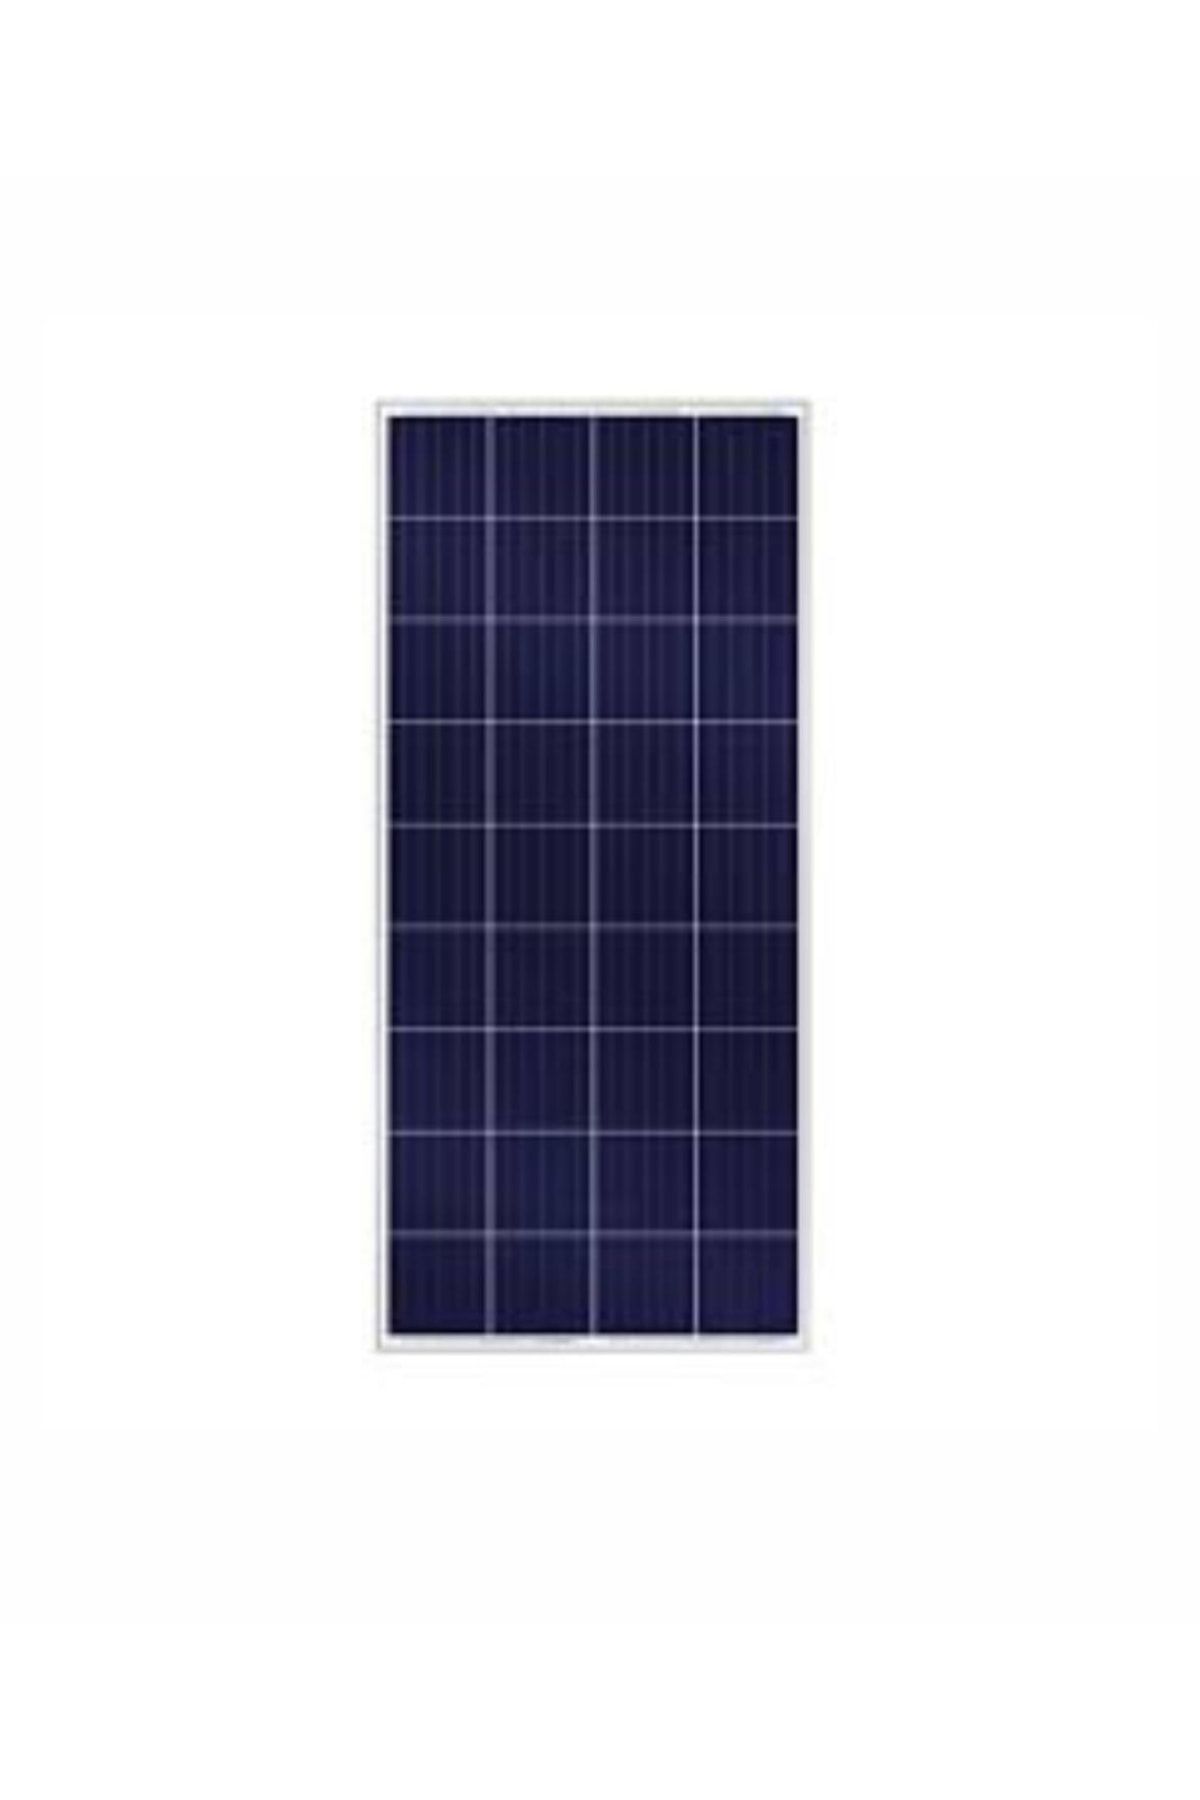 Pantec Solar 170 Watt Polikristal Güneş Paneli